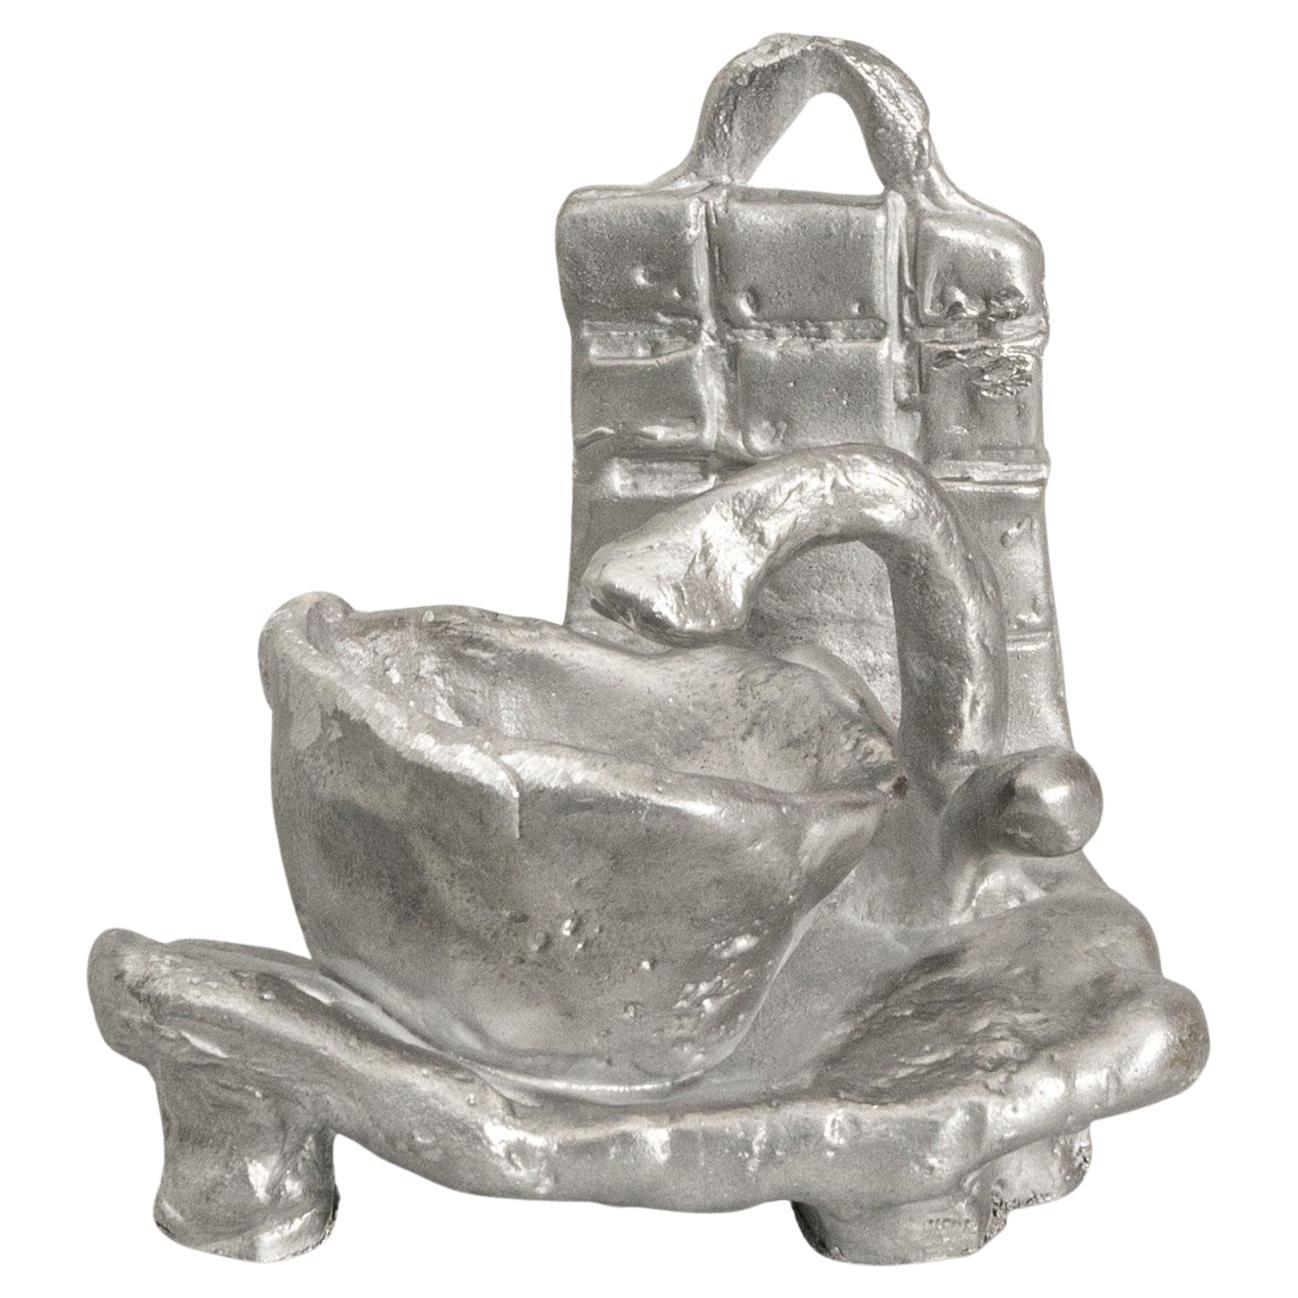 Handmade Aluminium cast standing sculpture depicting 'Low Sink'